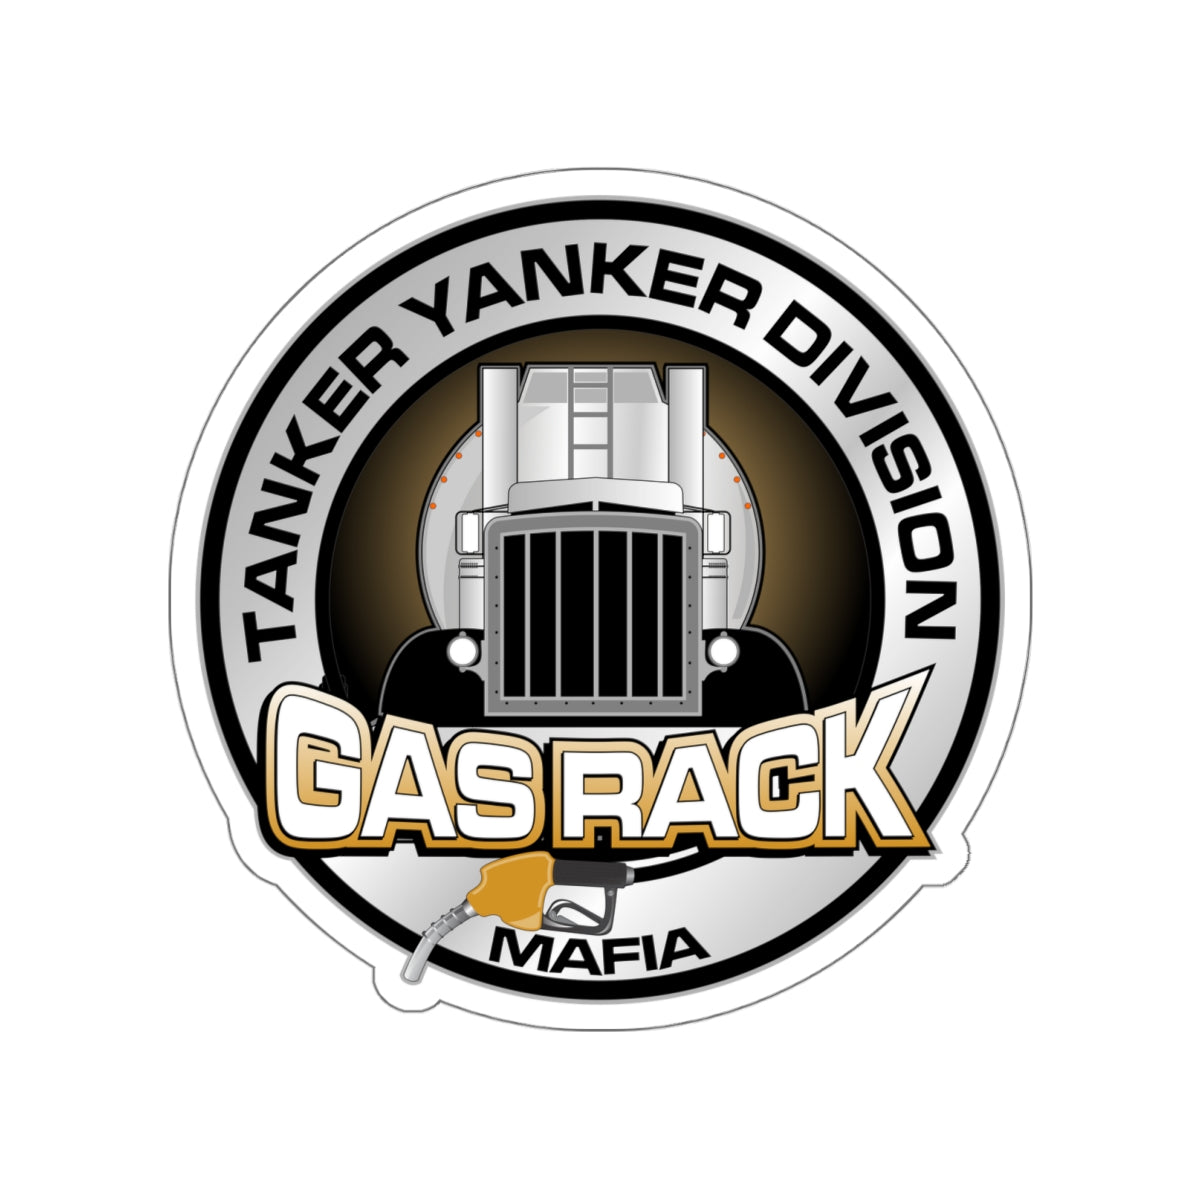 Gas Rack Mafia - Tanker Yanker Division - UV Inks - Laminated - Vinyl Die-Cut Decal